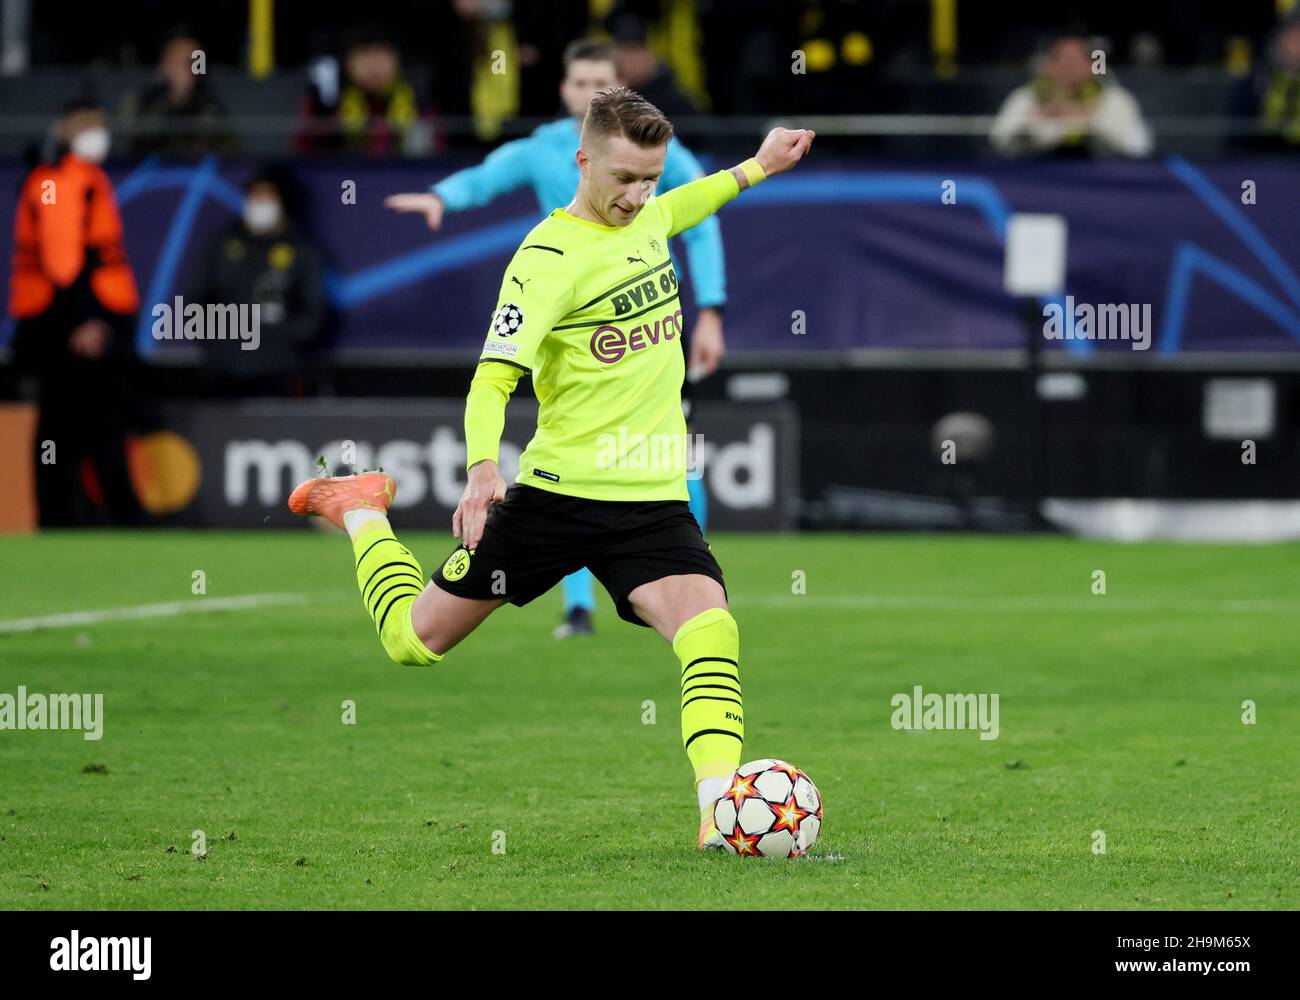 Soccer Football - Champions League - Group C - Borussia Dortmund v Besiktas  - Signal Iduna Park, Dortmund, Germany - December